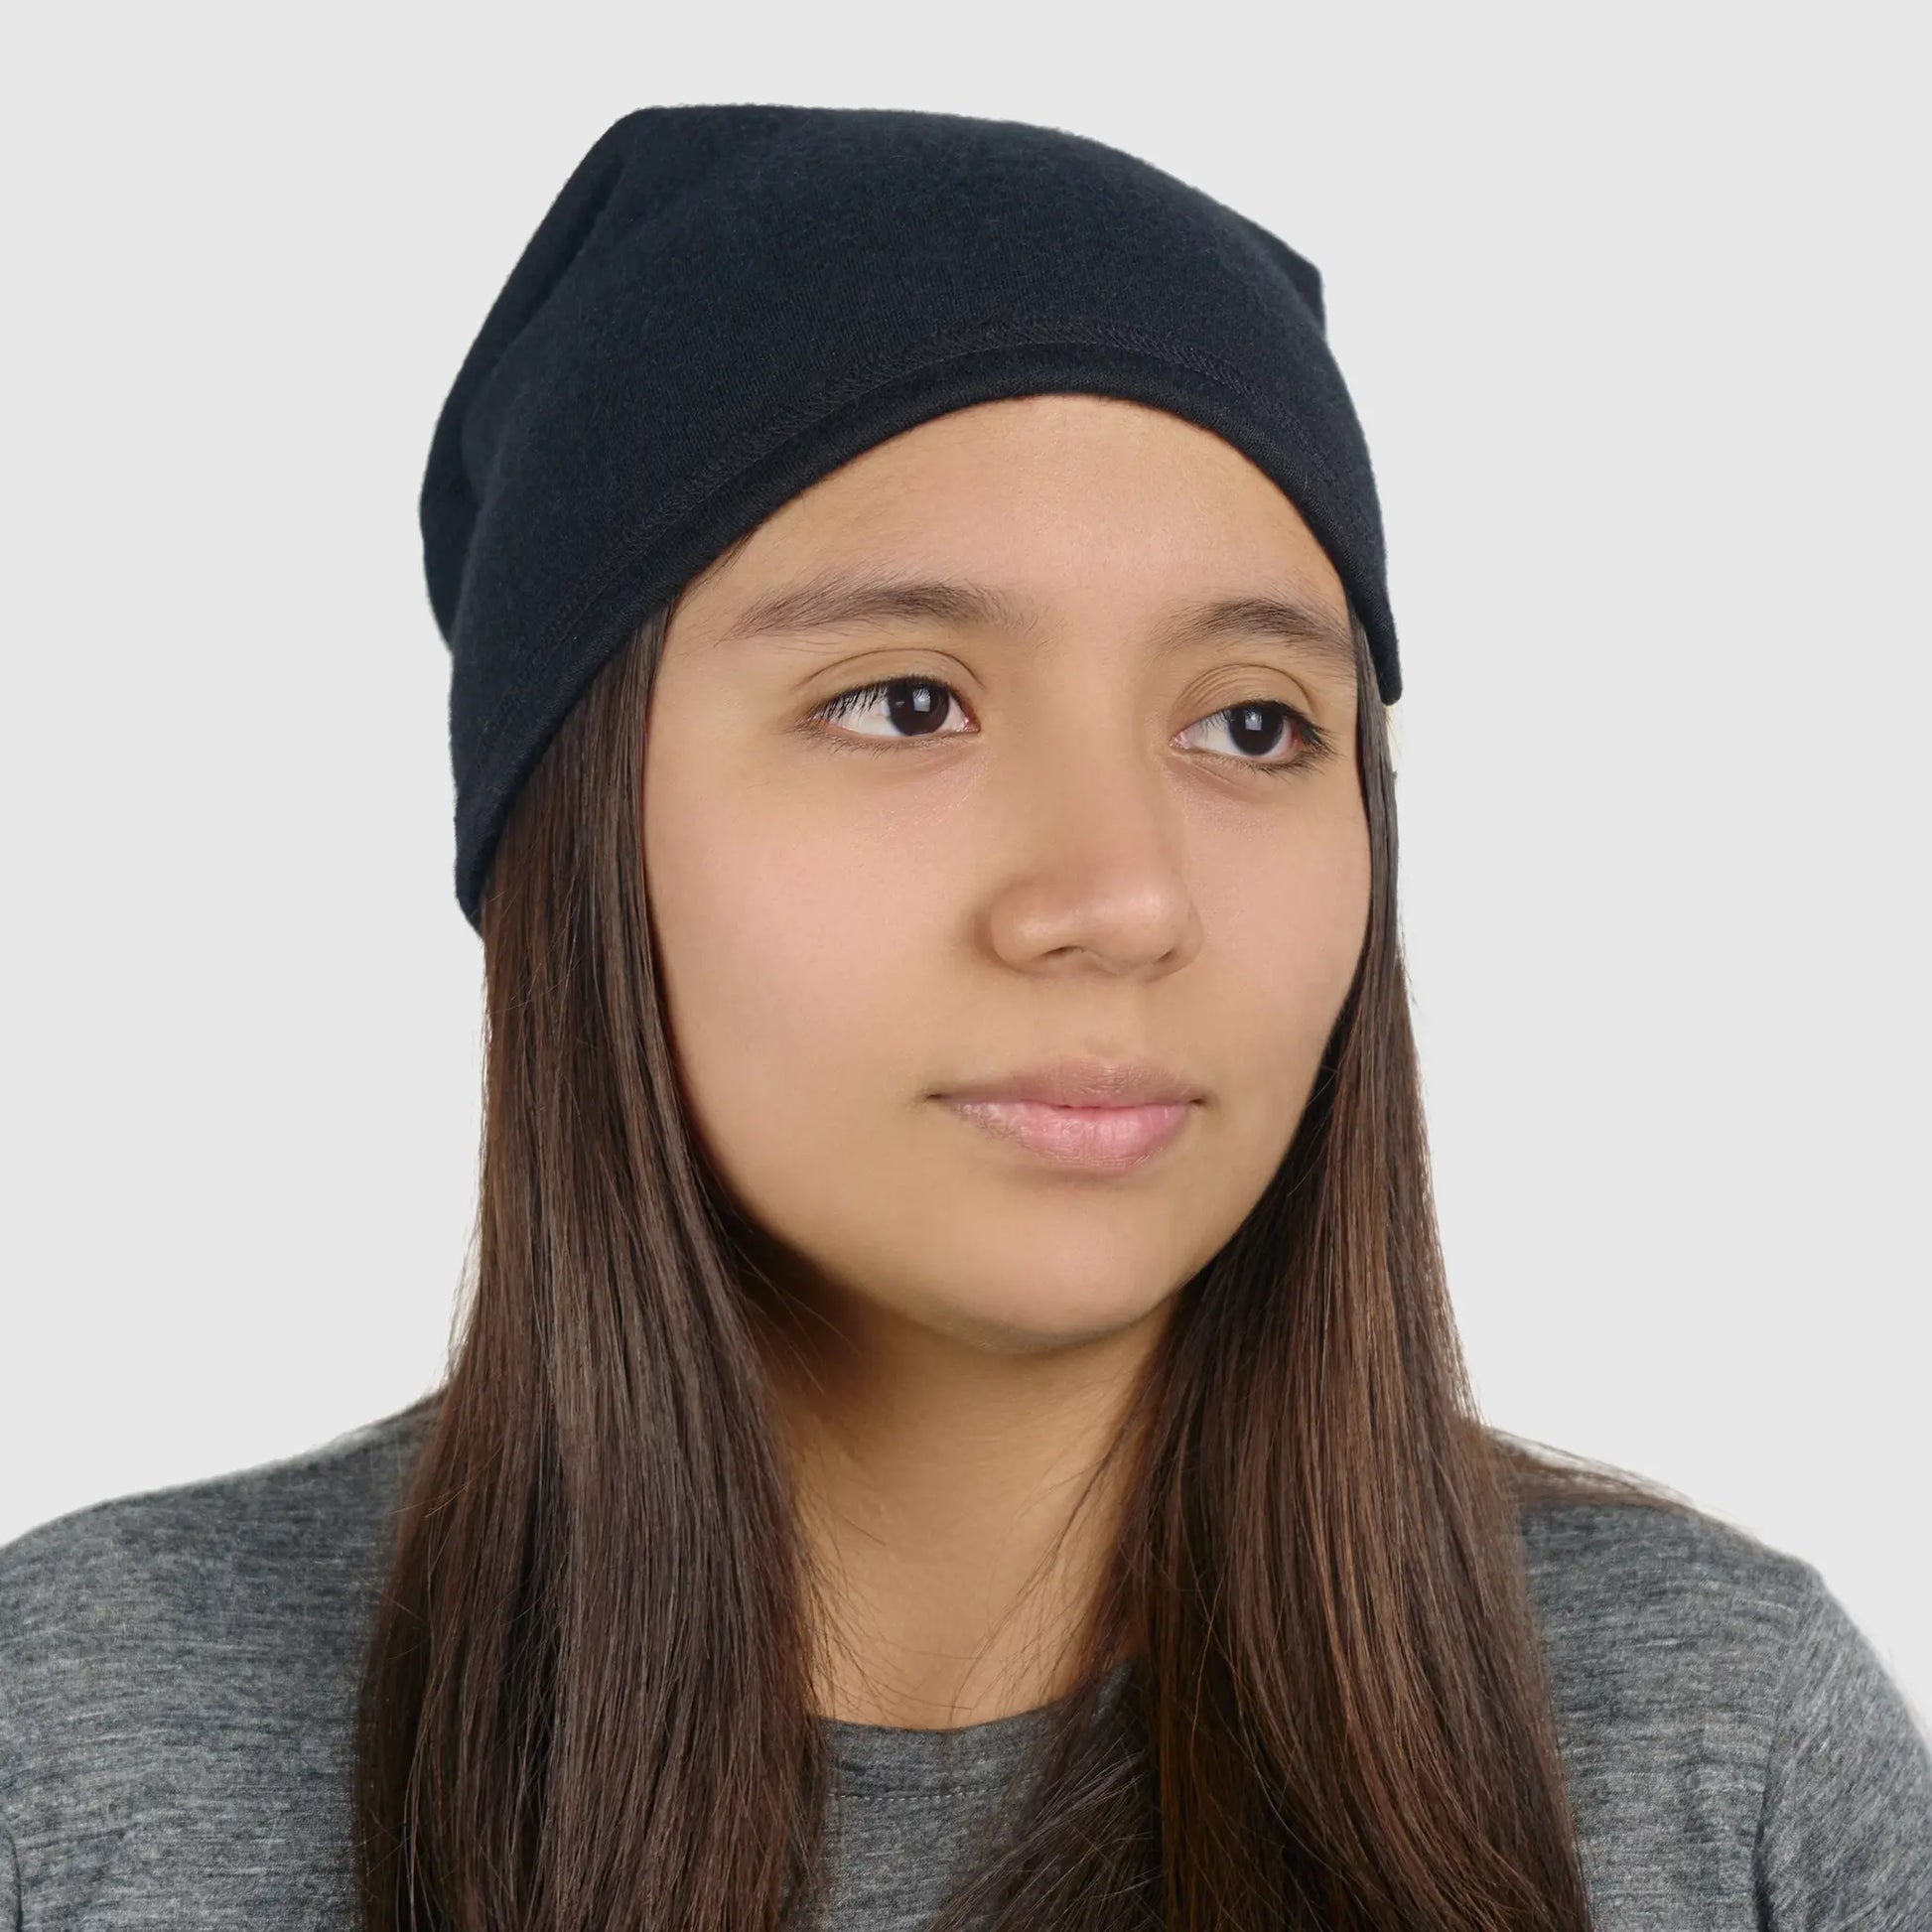 unisex all purpose folded beanie hat lightweight color black